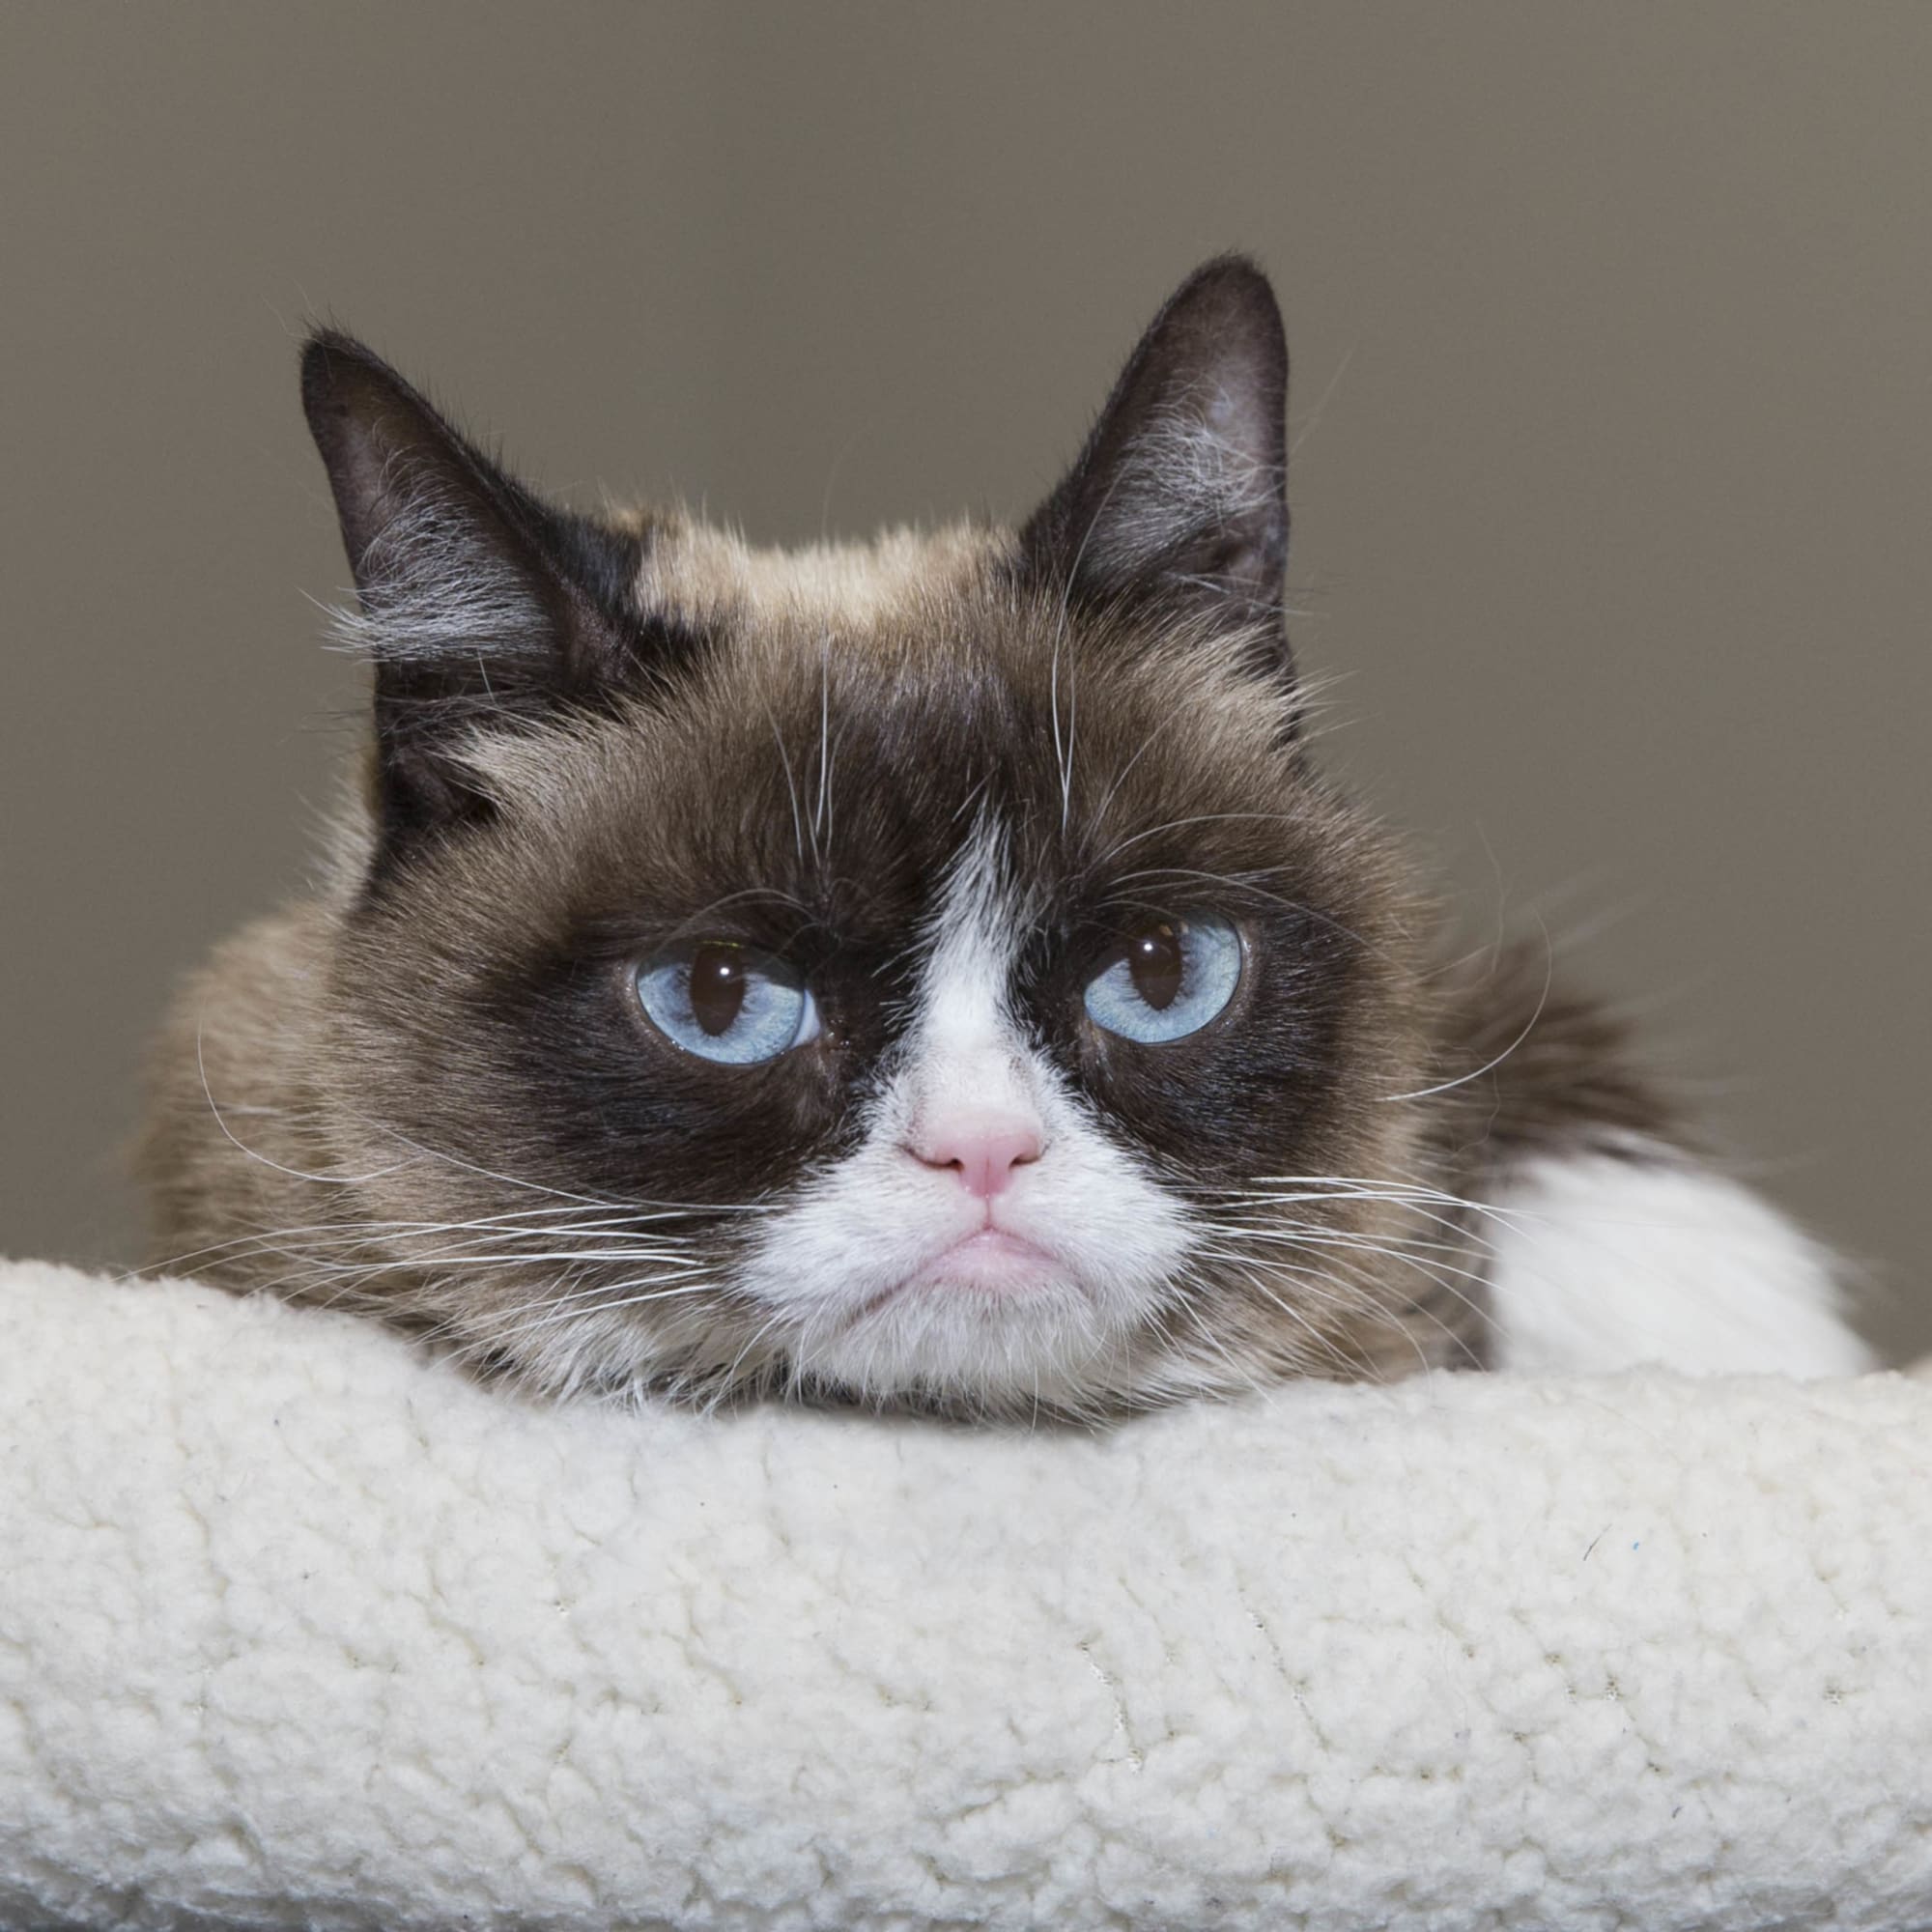 A tribute to Grumpy Cat the meme, the